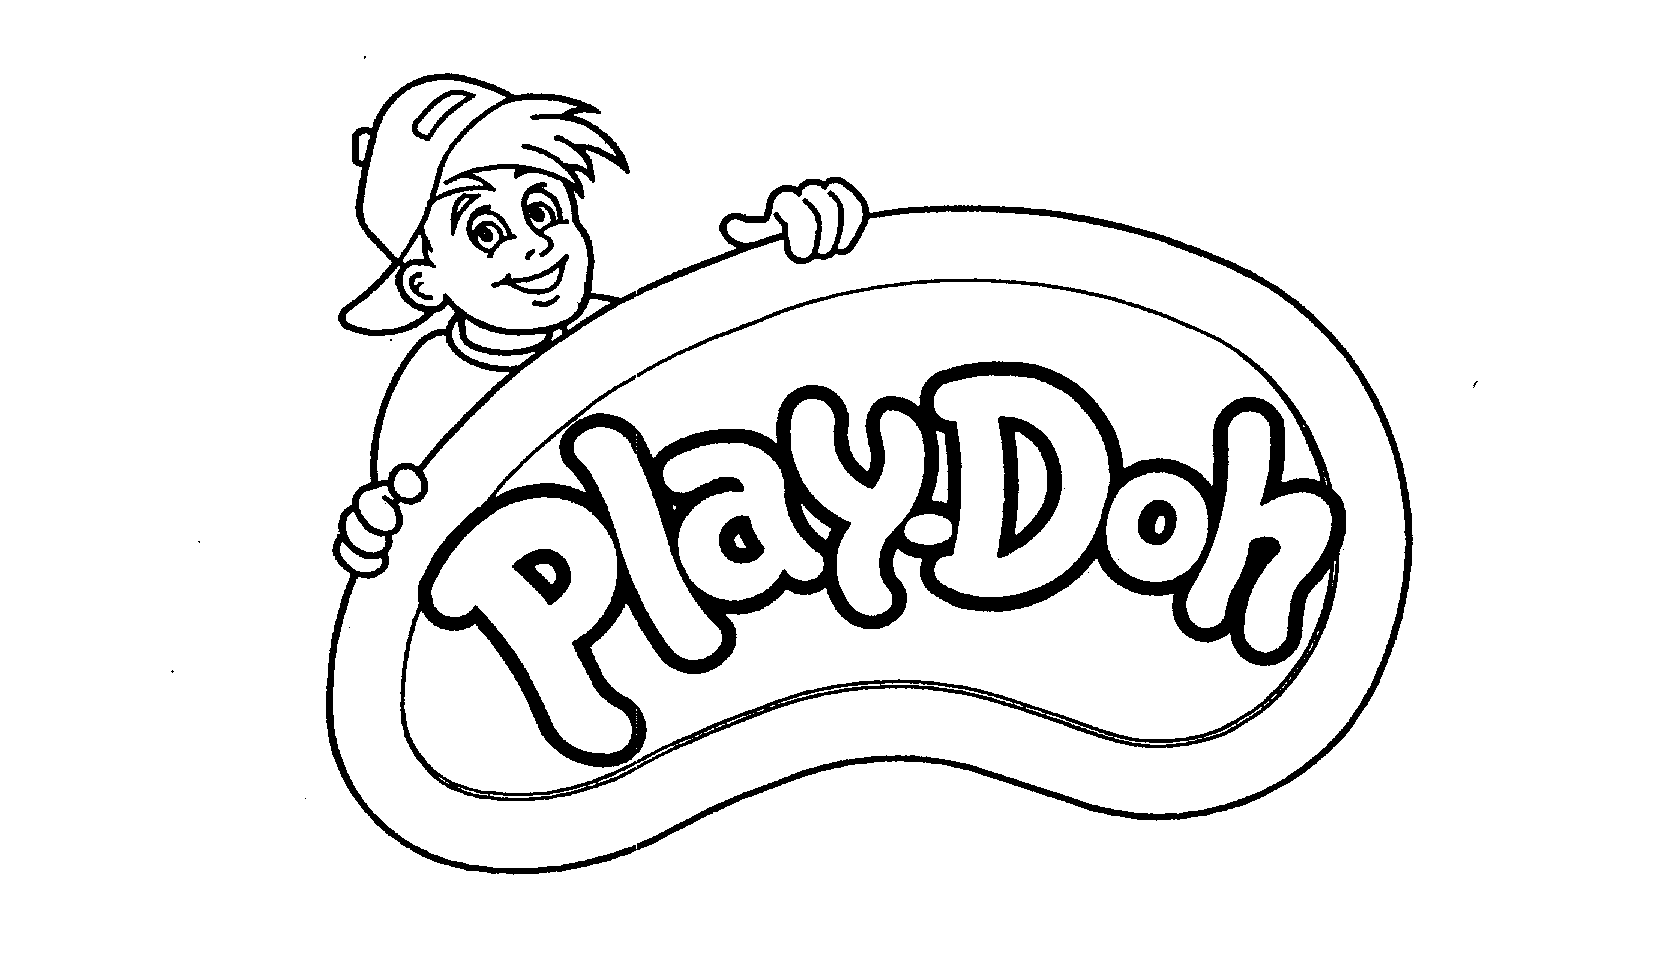 PLAY-DOH